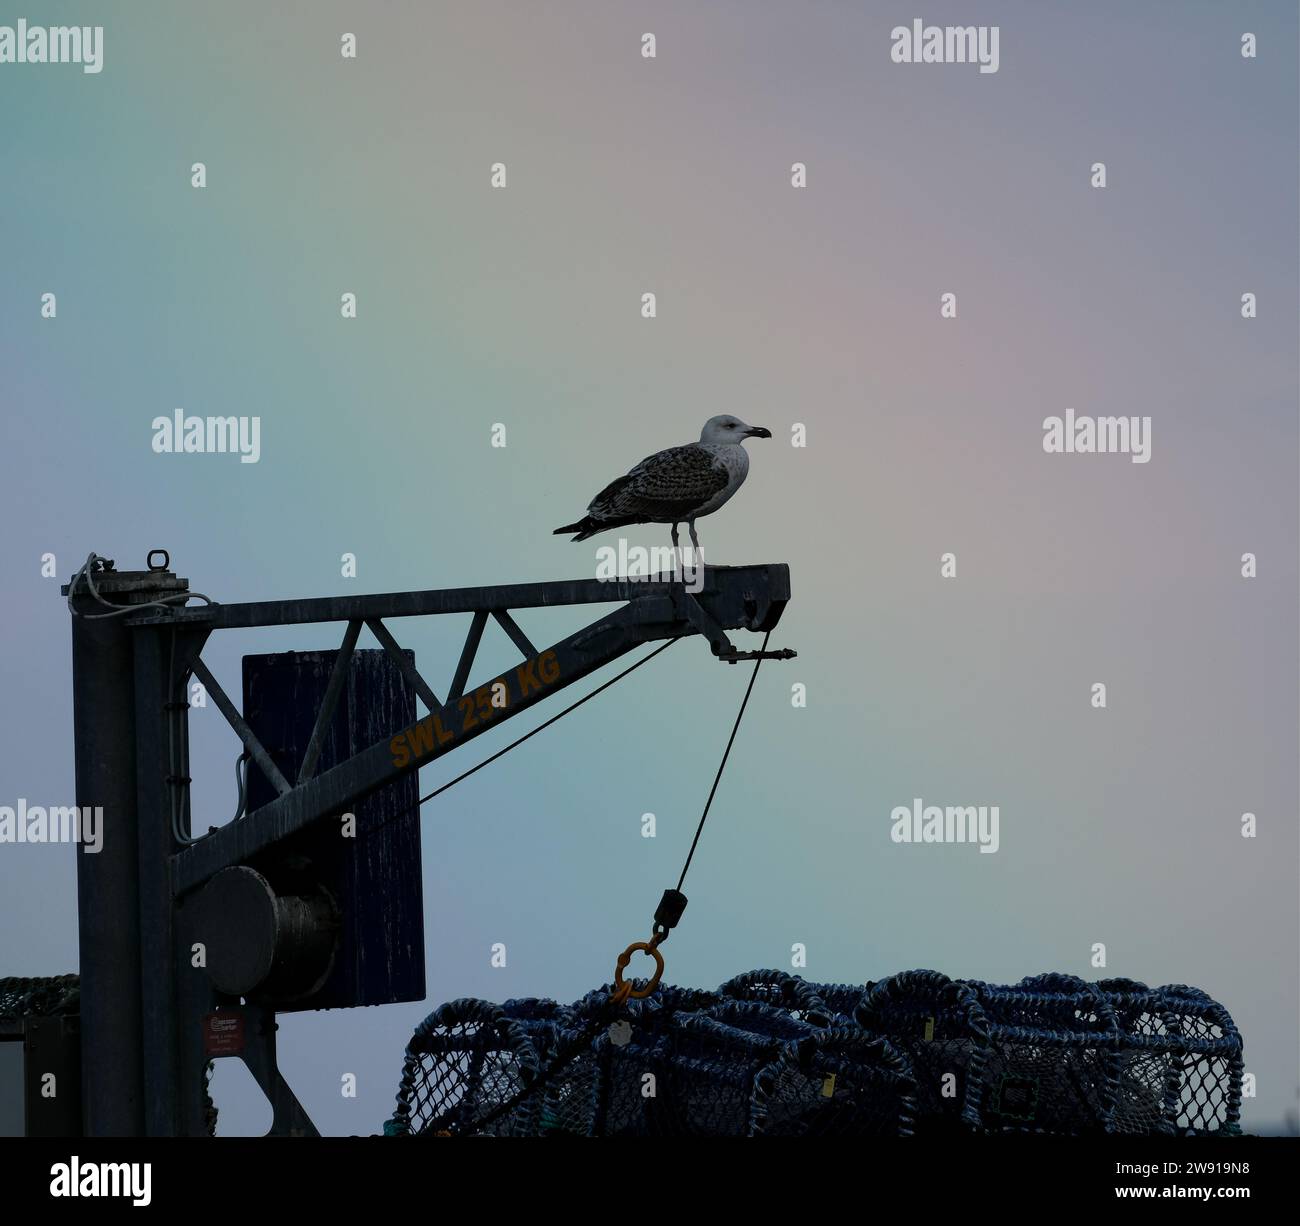 Gull am Hafenkran, Silhouette gegen Regenbogenhimmel. Stockfoto